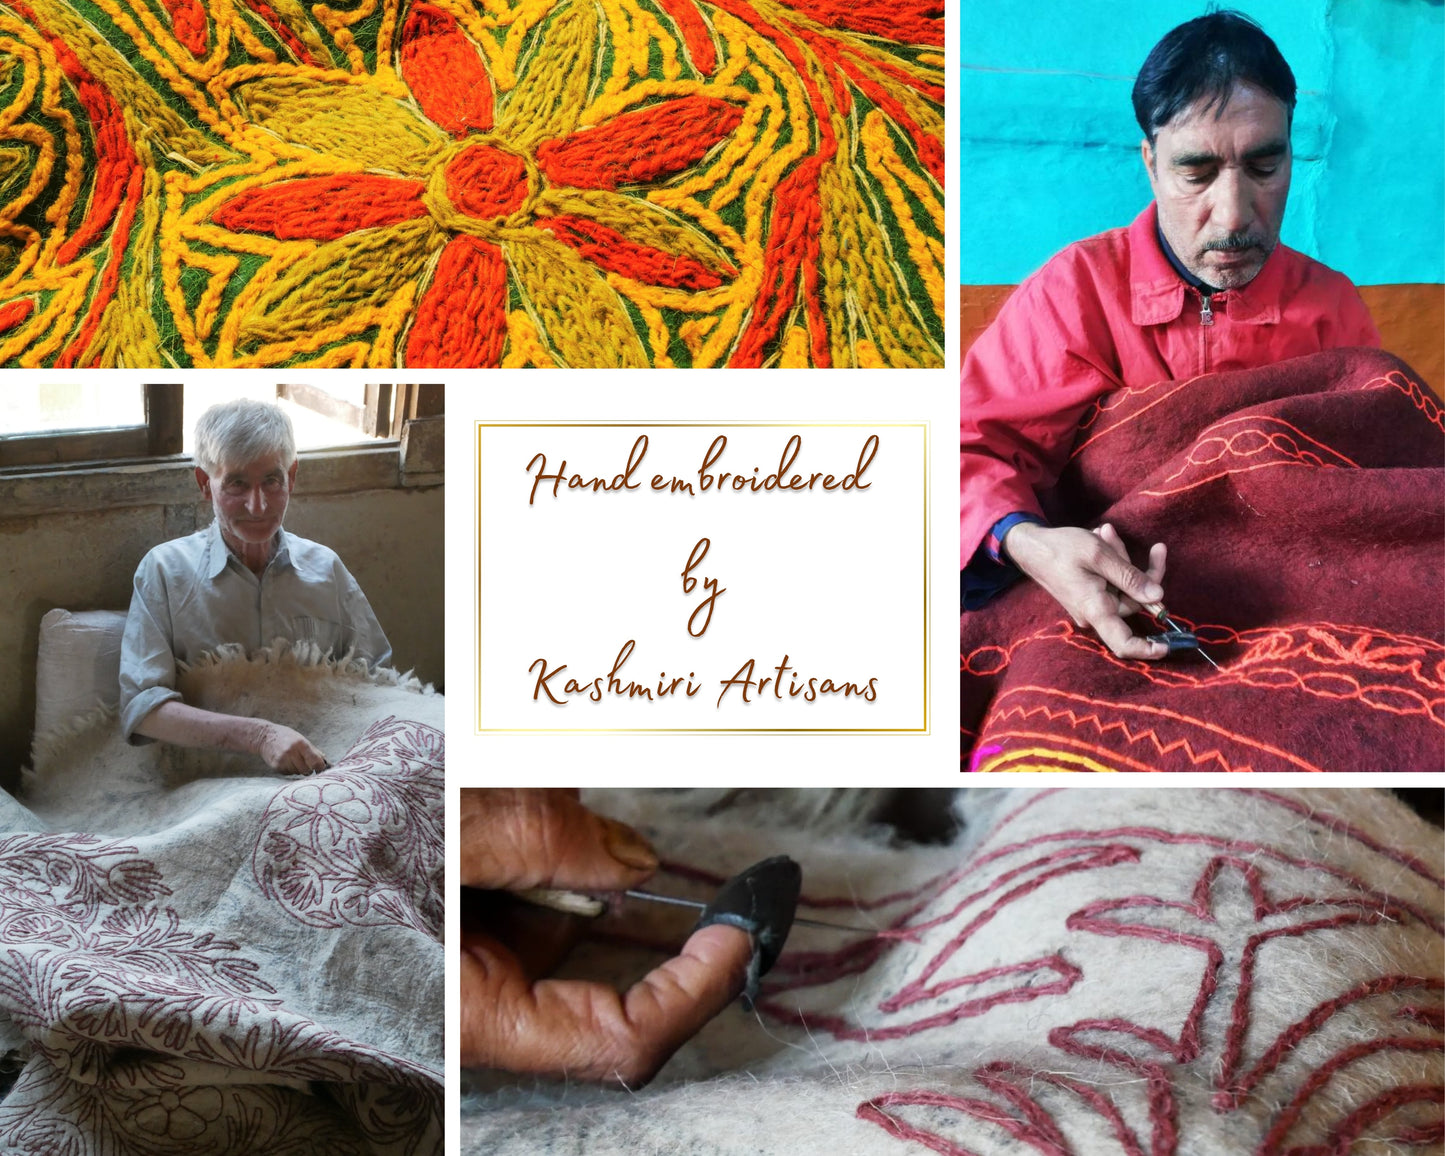 Himalayan Hues: Handmade Namda Wool Rug 6x9ft – Tradition and Warmth Infused with Kashmiri Charm!